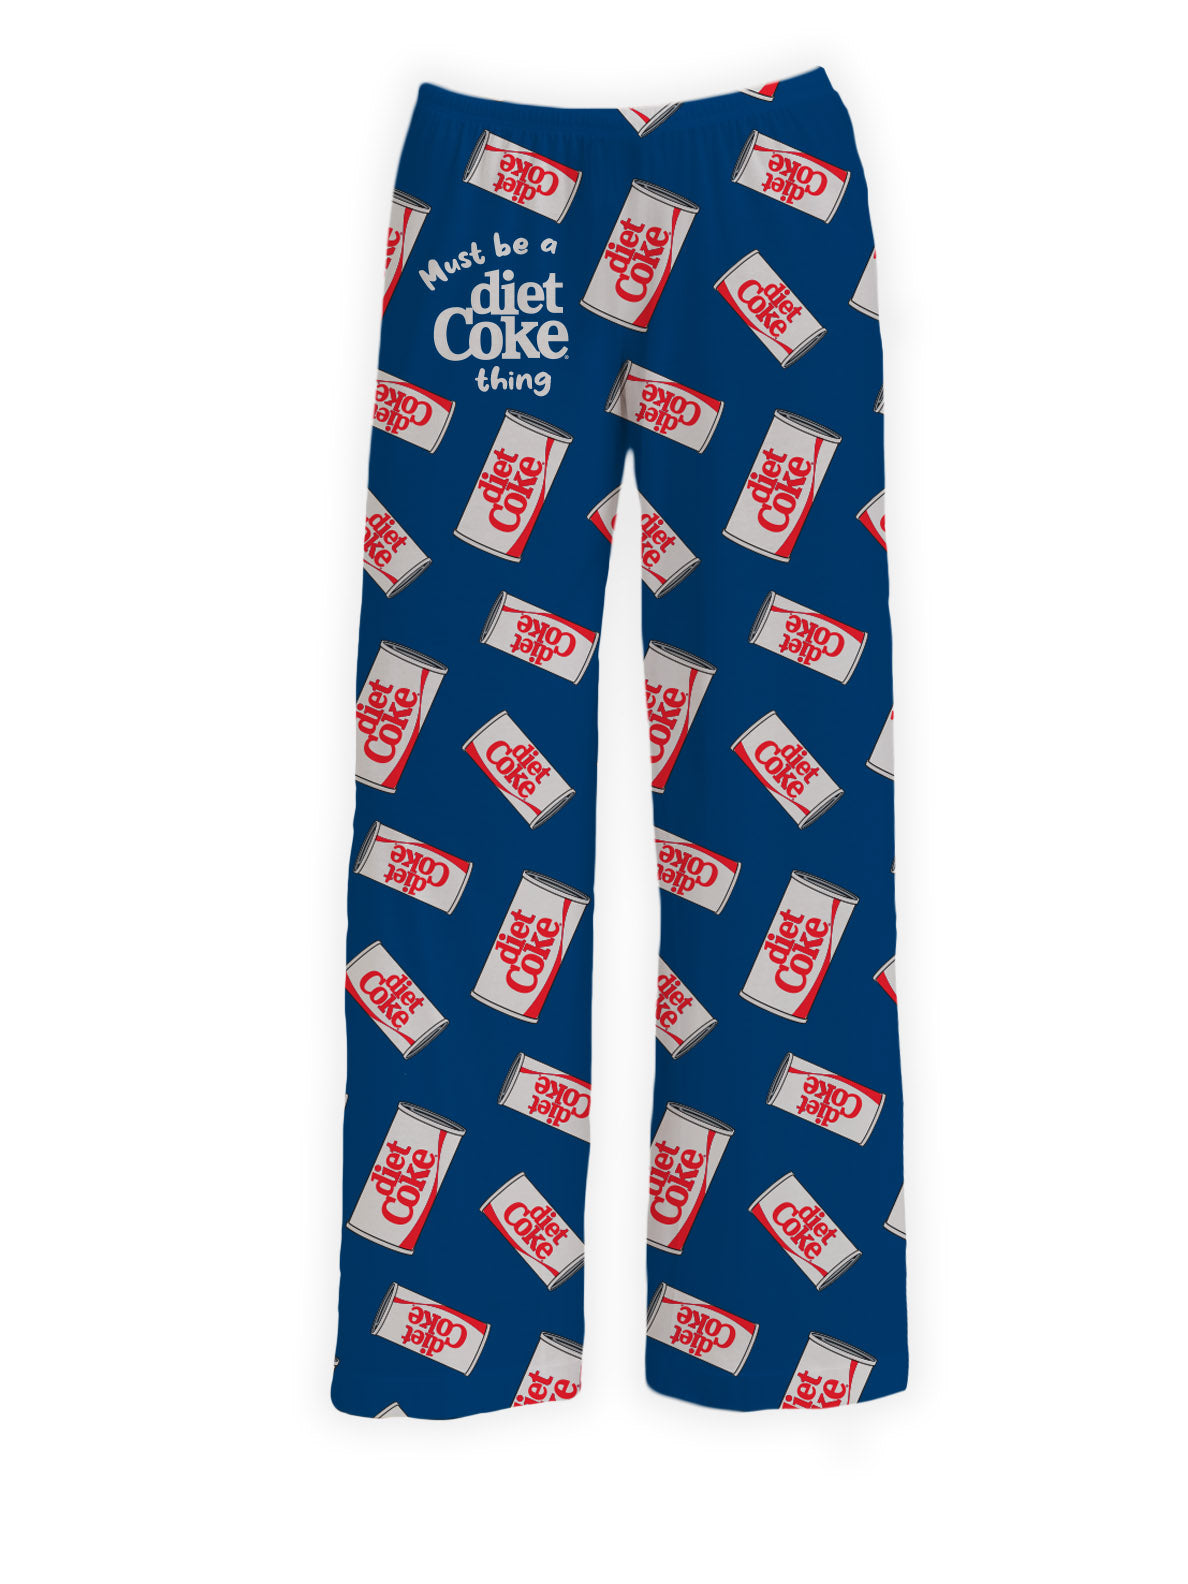 BRIEF INSANITY Diet Coke Pajama Lounge Pants